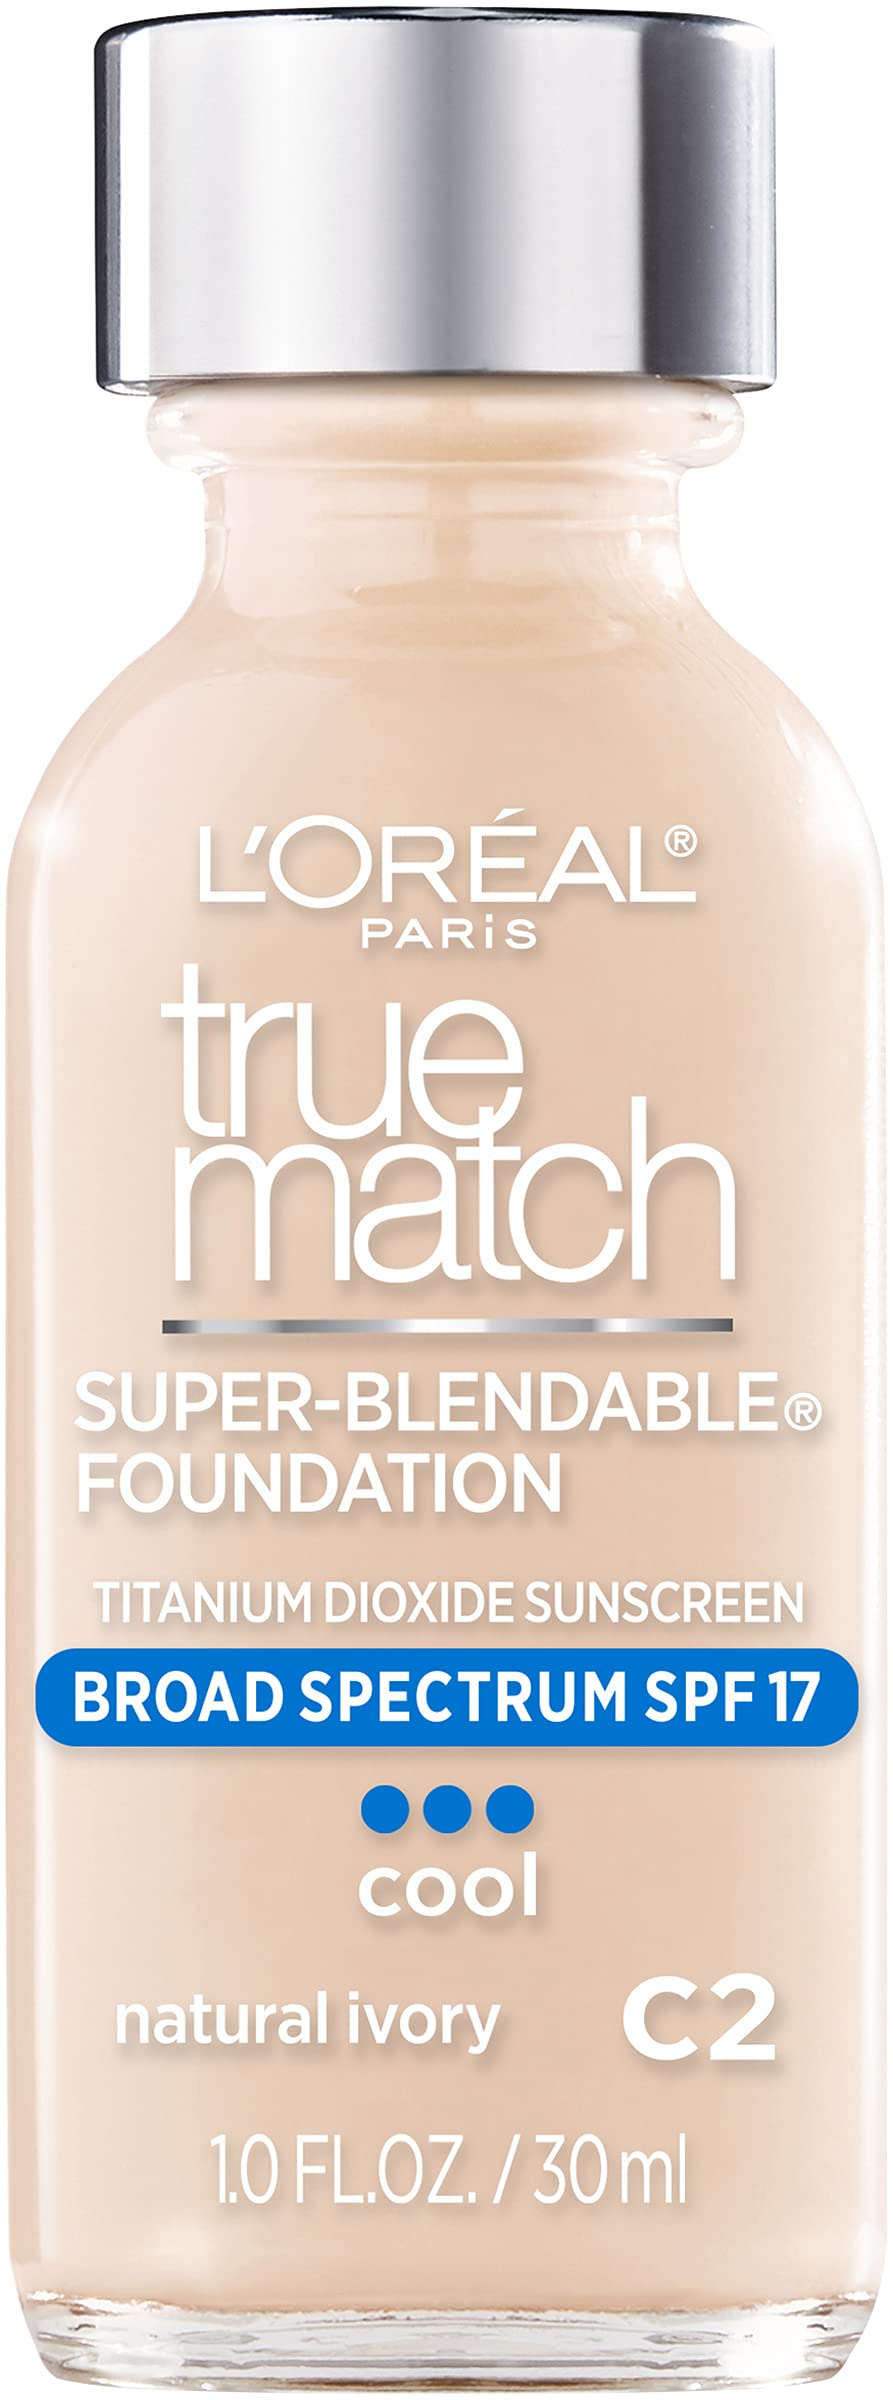 L'Oreal Paris Makeup True Match Super-Blendable Liquid Foundation, Natural Ivory C2, 1 Fl Oz (1 Count)